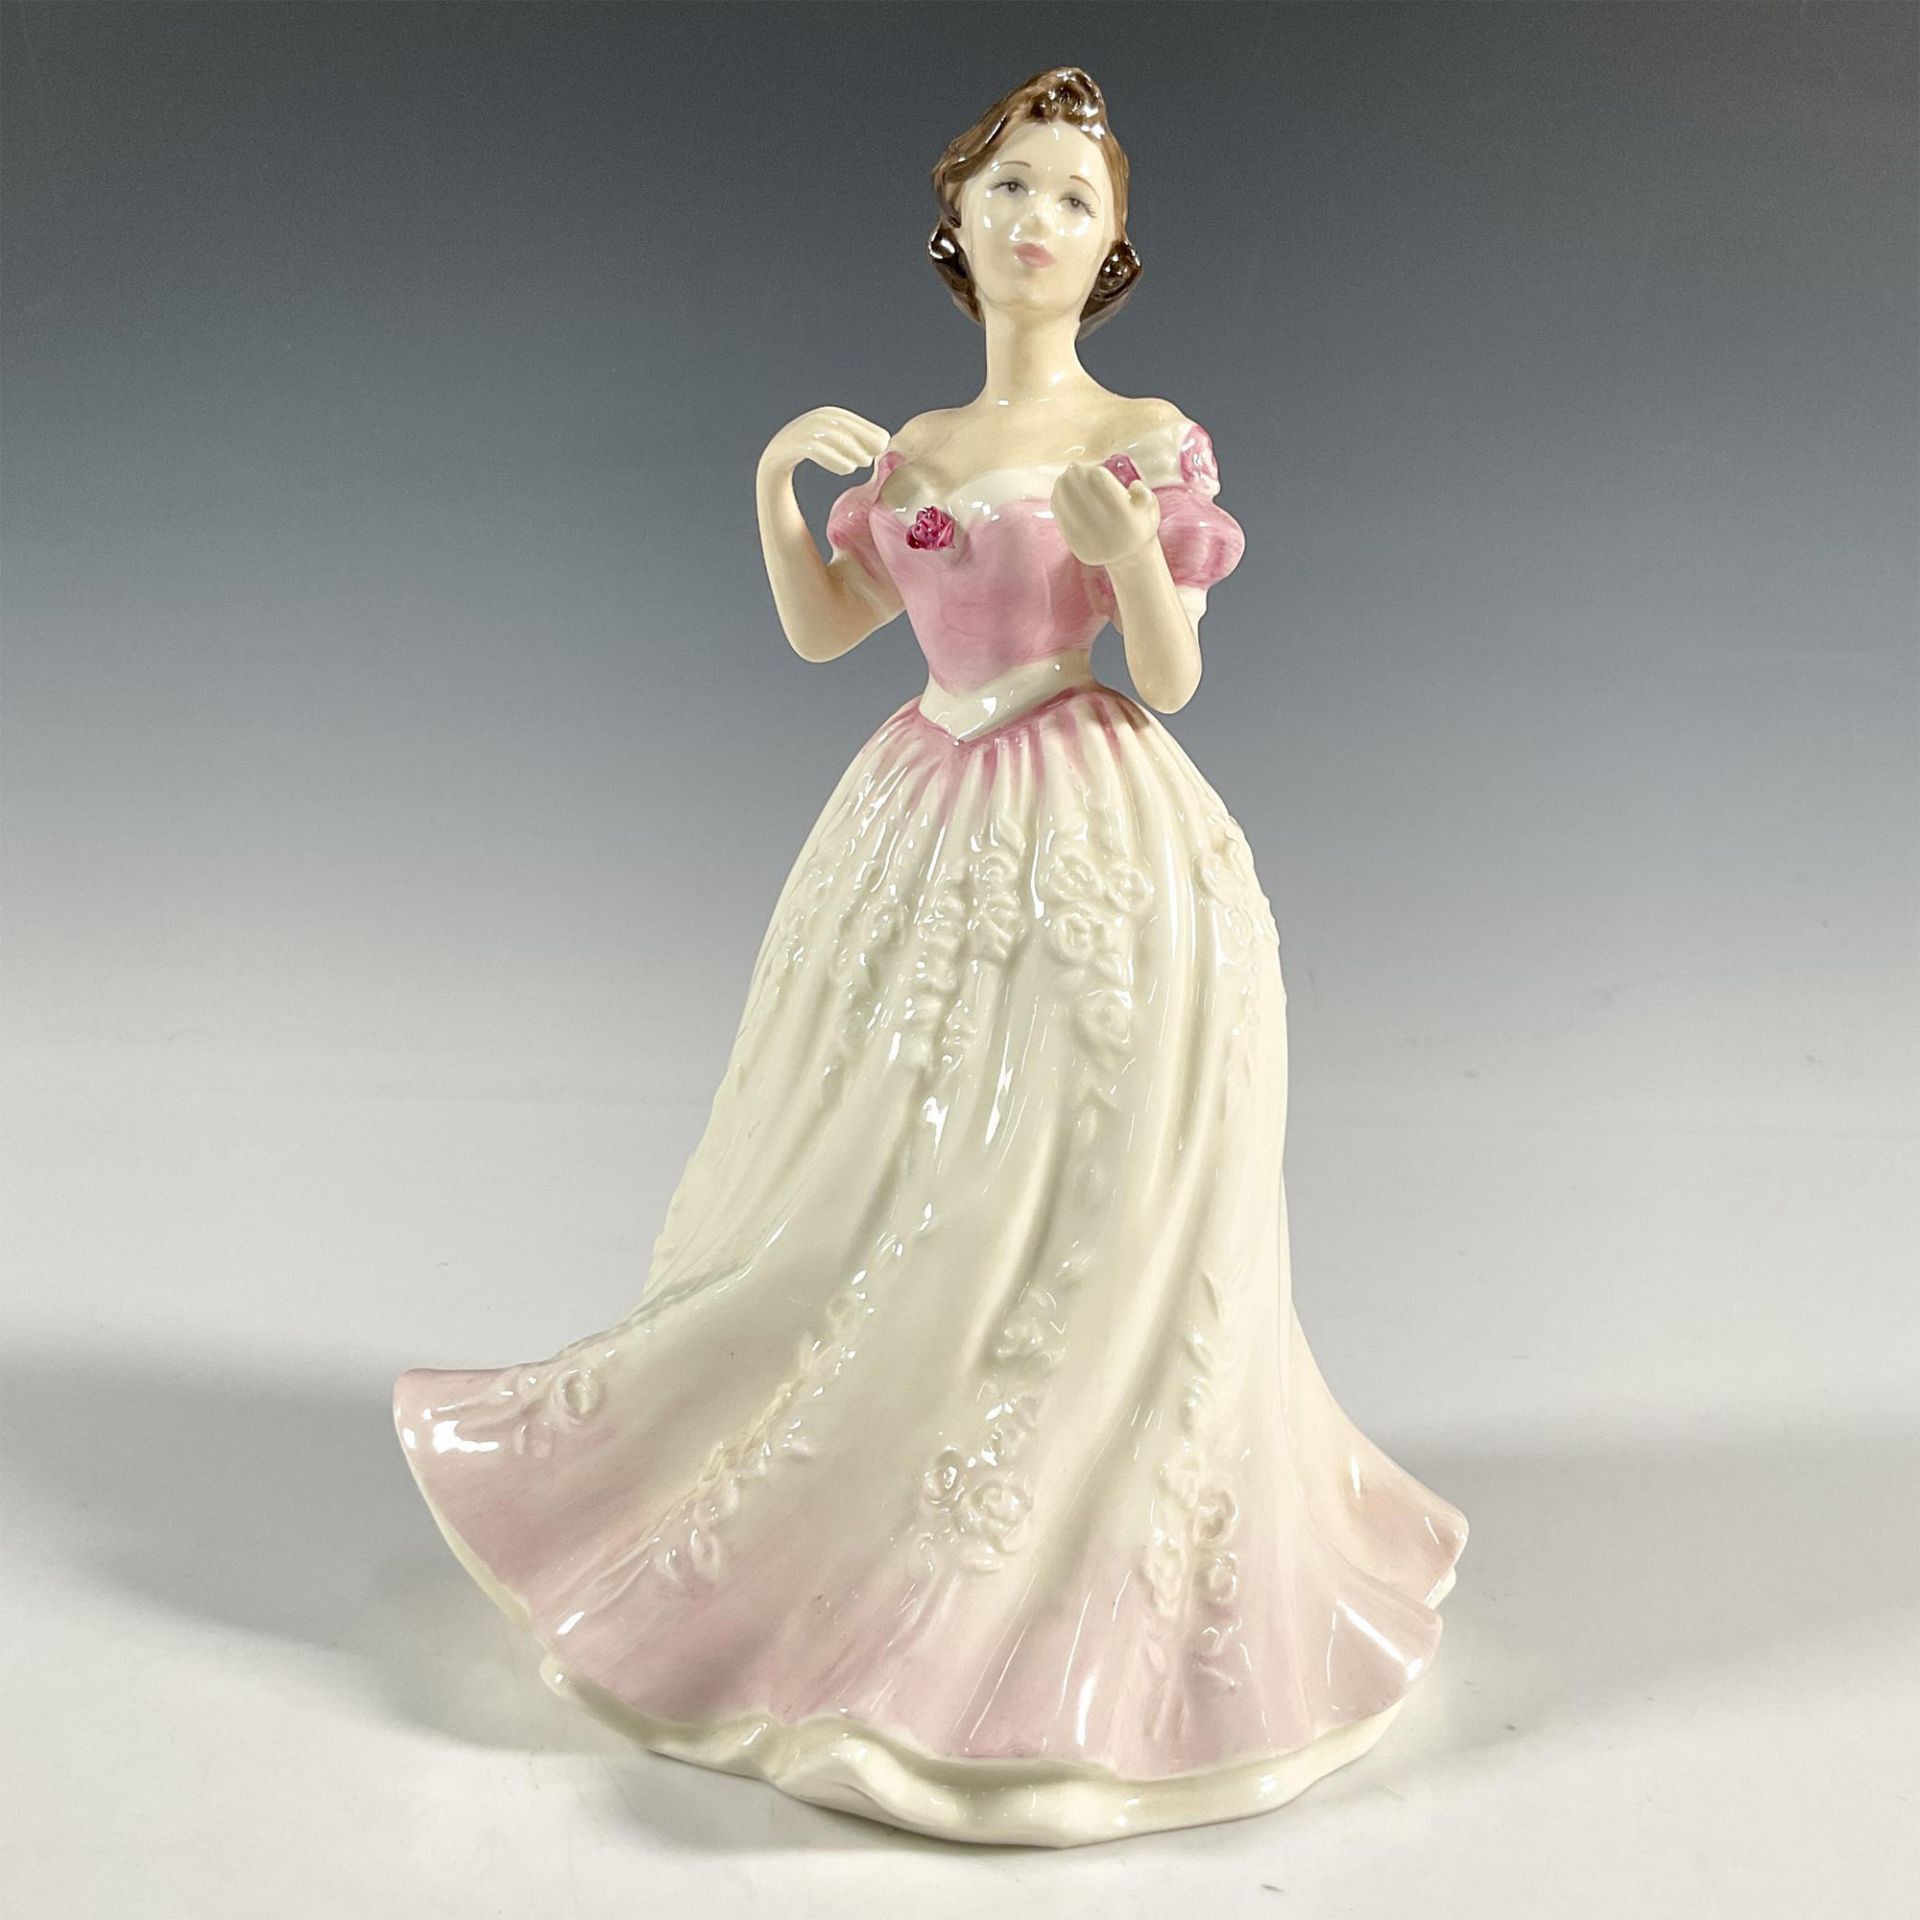 Charity HN4243 - Royal Doulton Figurine